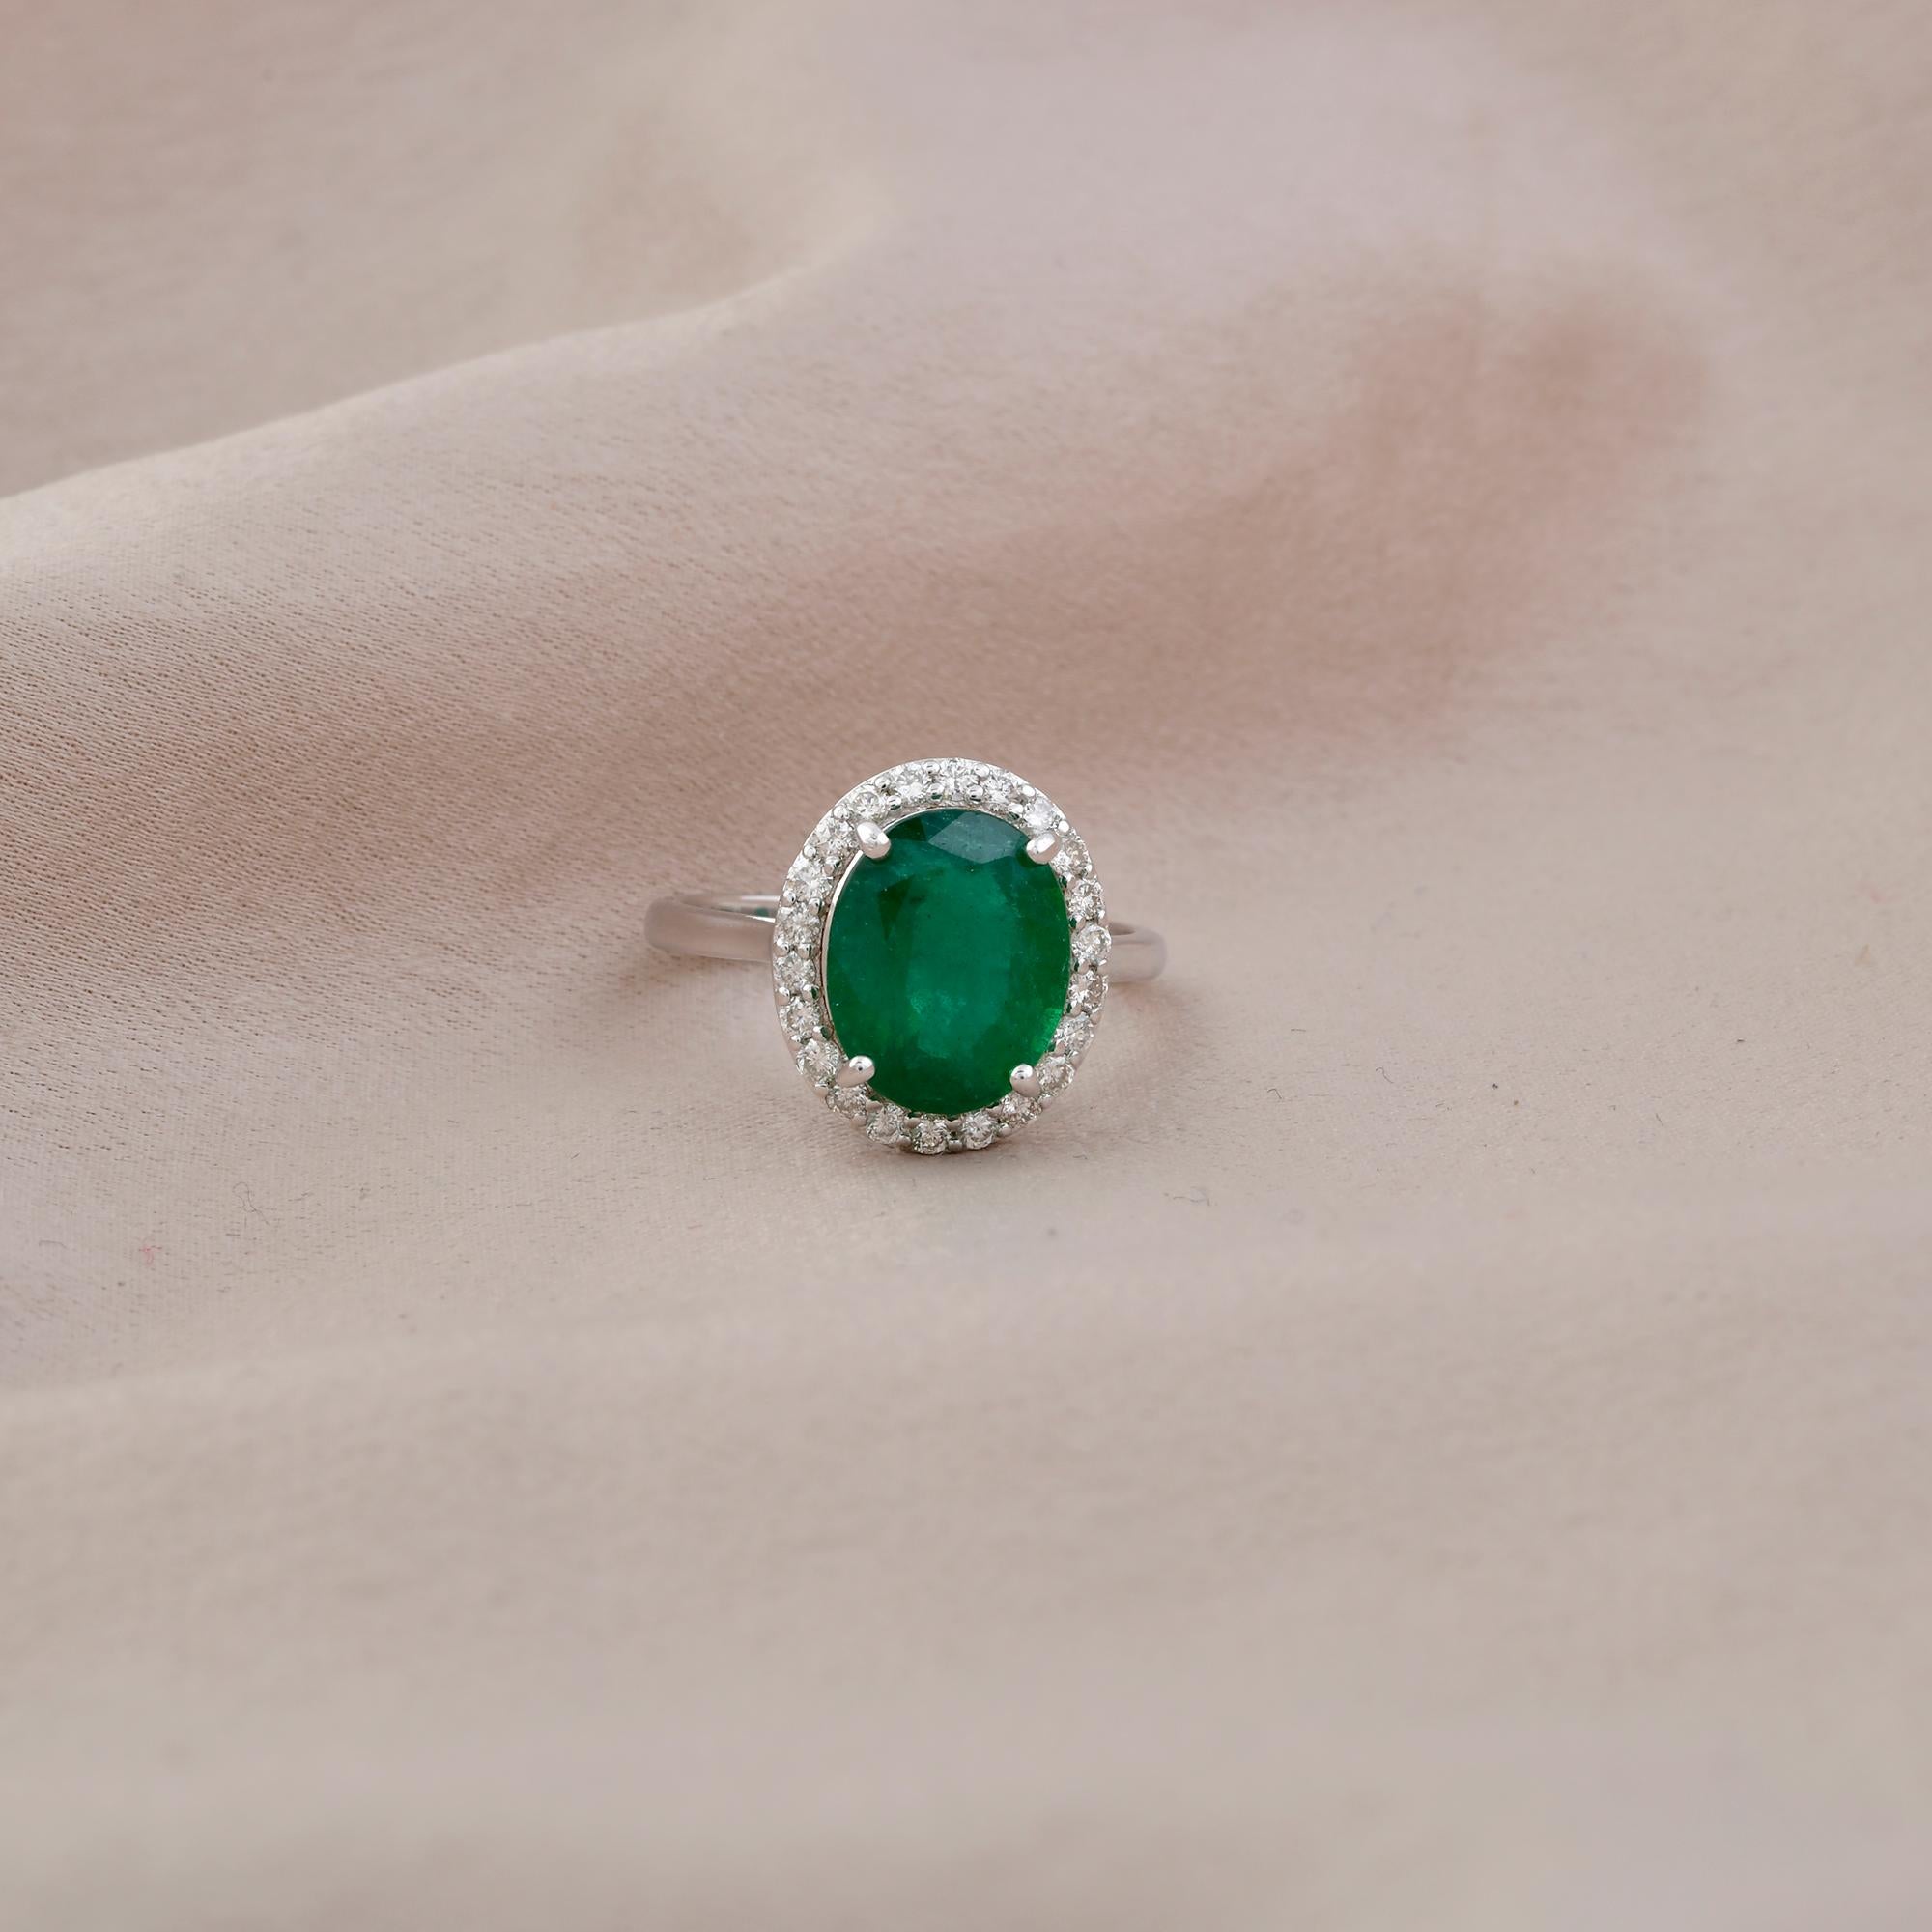 Oval Cut Oval Zambian Emerald Gemstone Cocktail Ring Diamond 18 Karat White Gold Jewelry For Sale